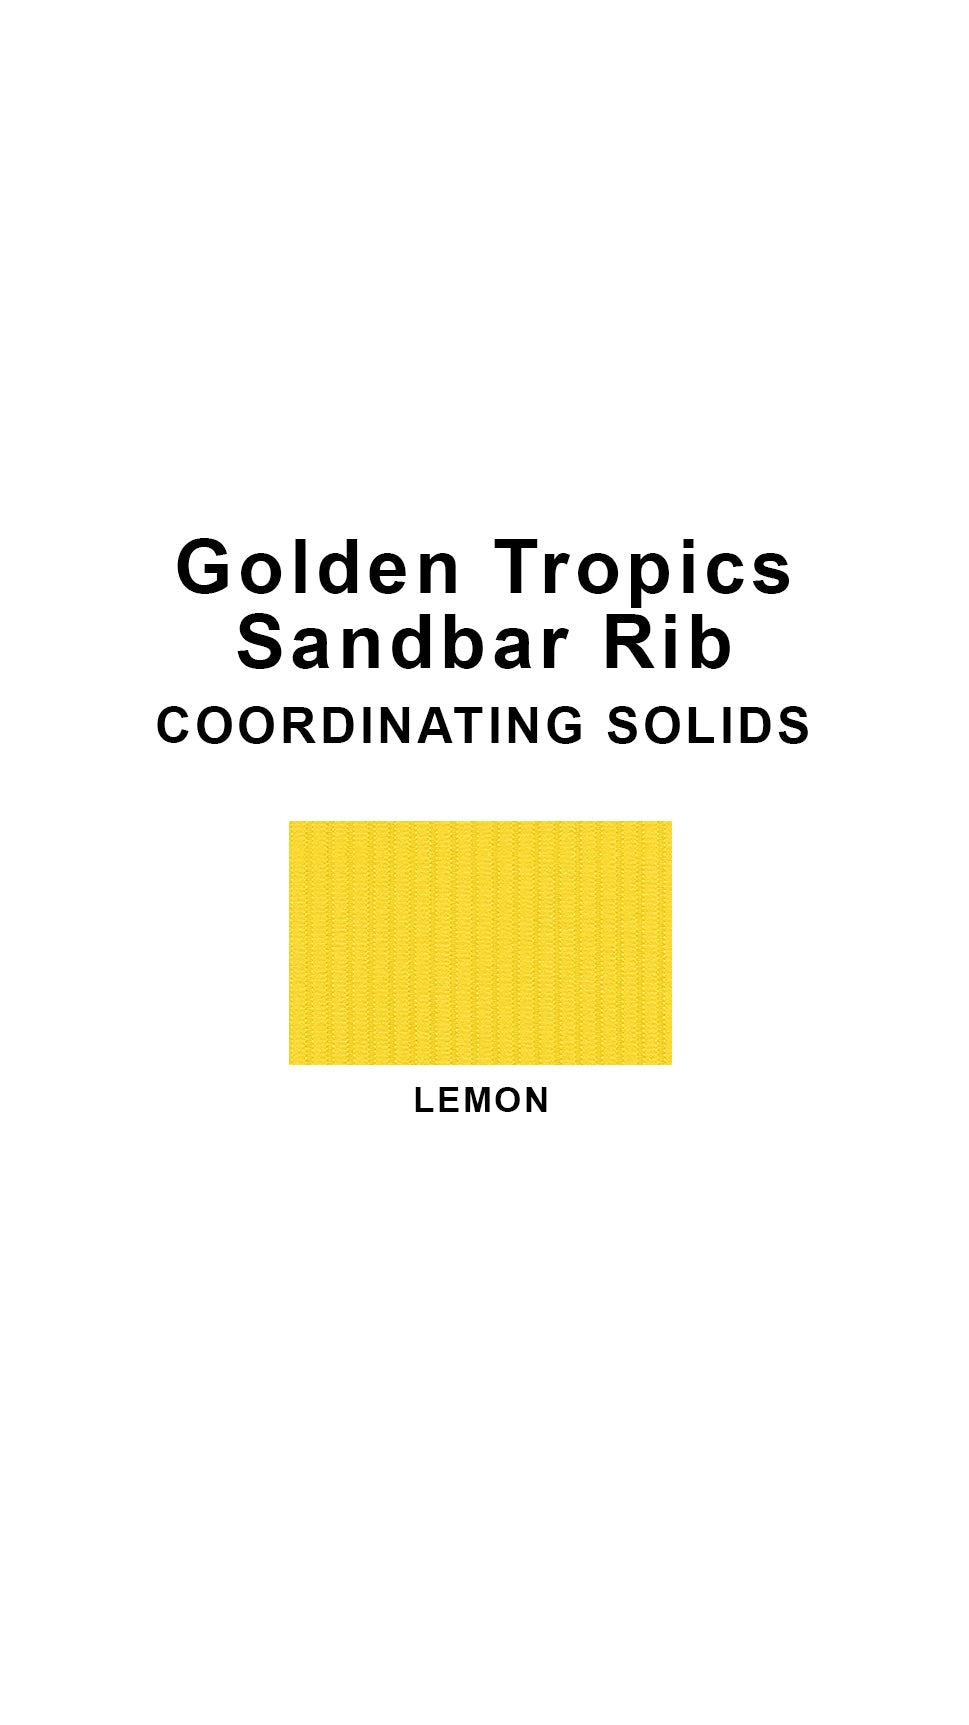 Coordinating solids chart for Golden Tropics Sandbar Rib swimsuit print: Lemon